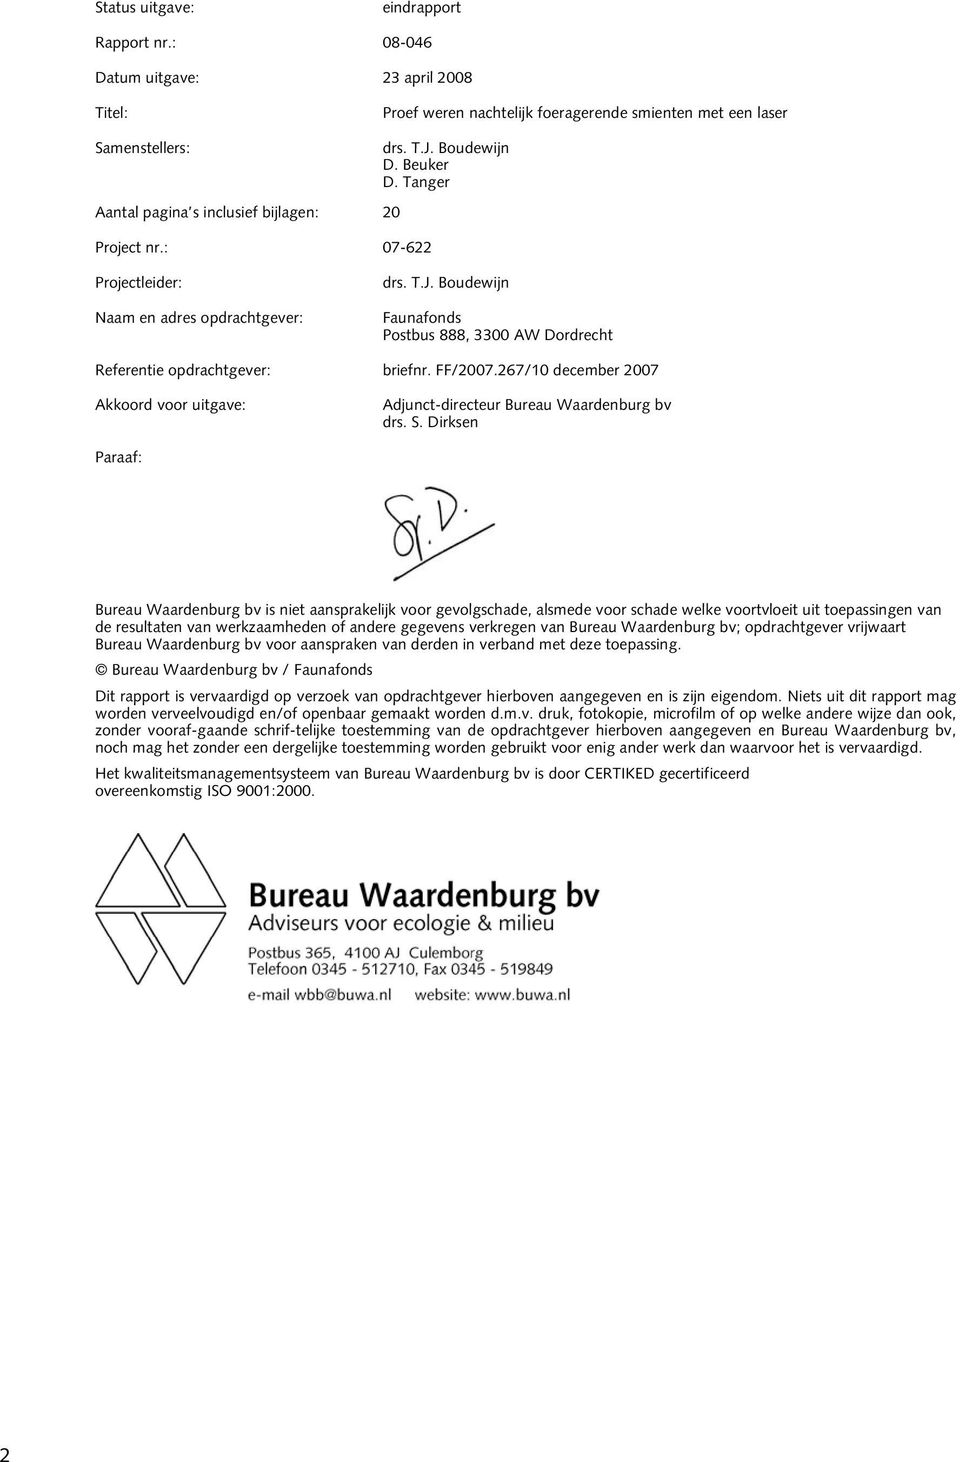 Beuker D. Tanger Projectleider: Naam en adres opdrachtgever: drs. T.J. Boudewijn Faunafonds Postbus 888, 3300 AW Dordrecht Referentie opdrachtgever: briefnr. FF/2007.